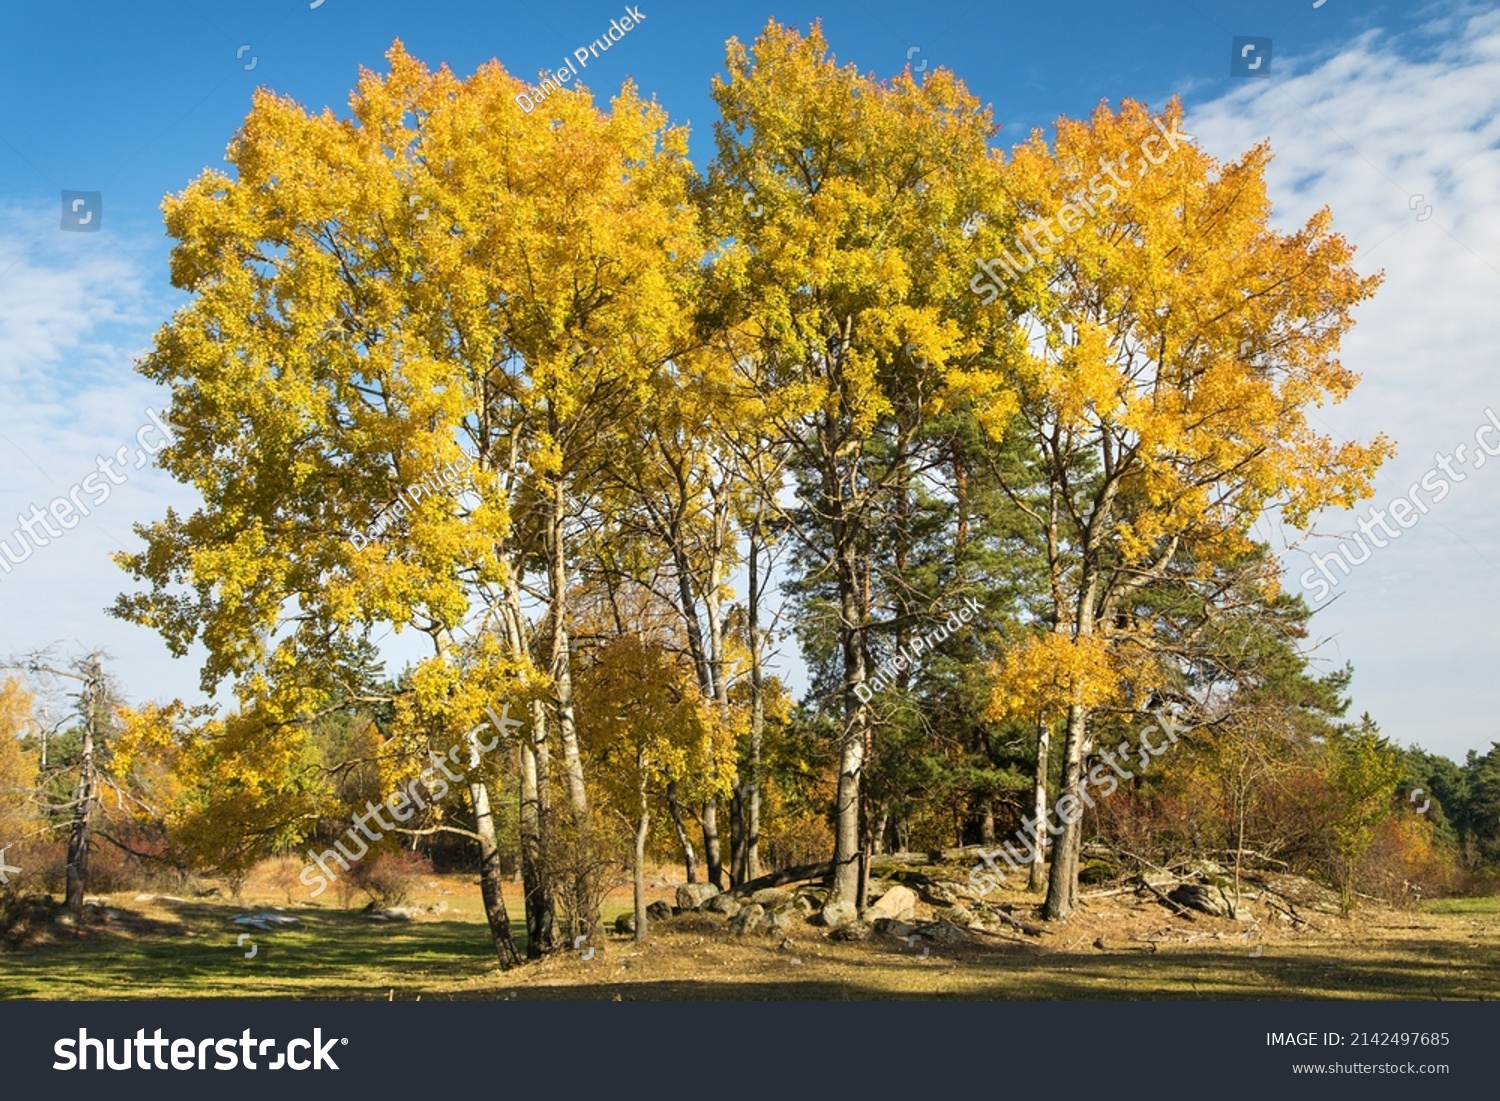 forest grove of Populus tremula,  called as common aspen, Eurasian aspen, European aspen, or quaking aspen, autumnal landscape view #2142497685